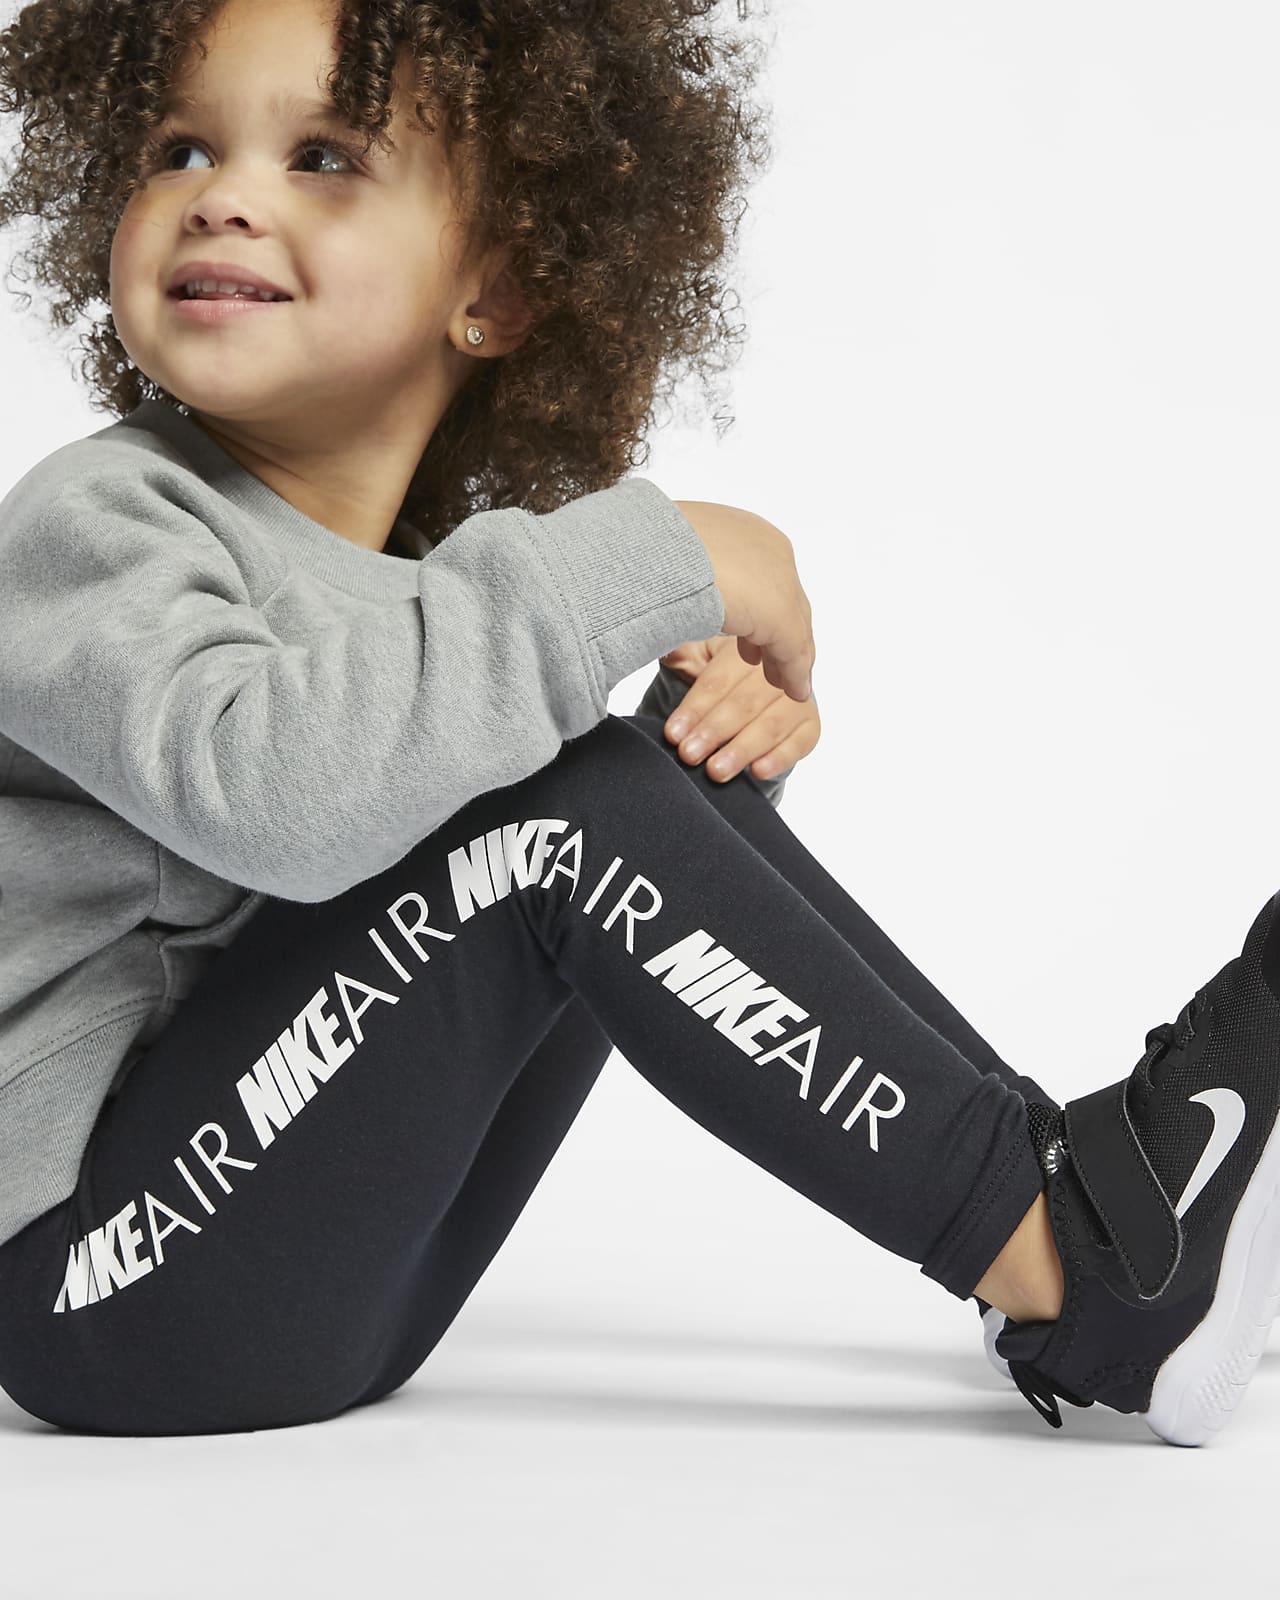 Nike Air 婴童紧身裤